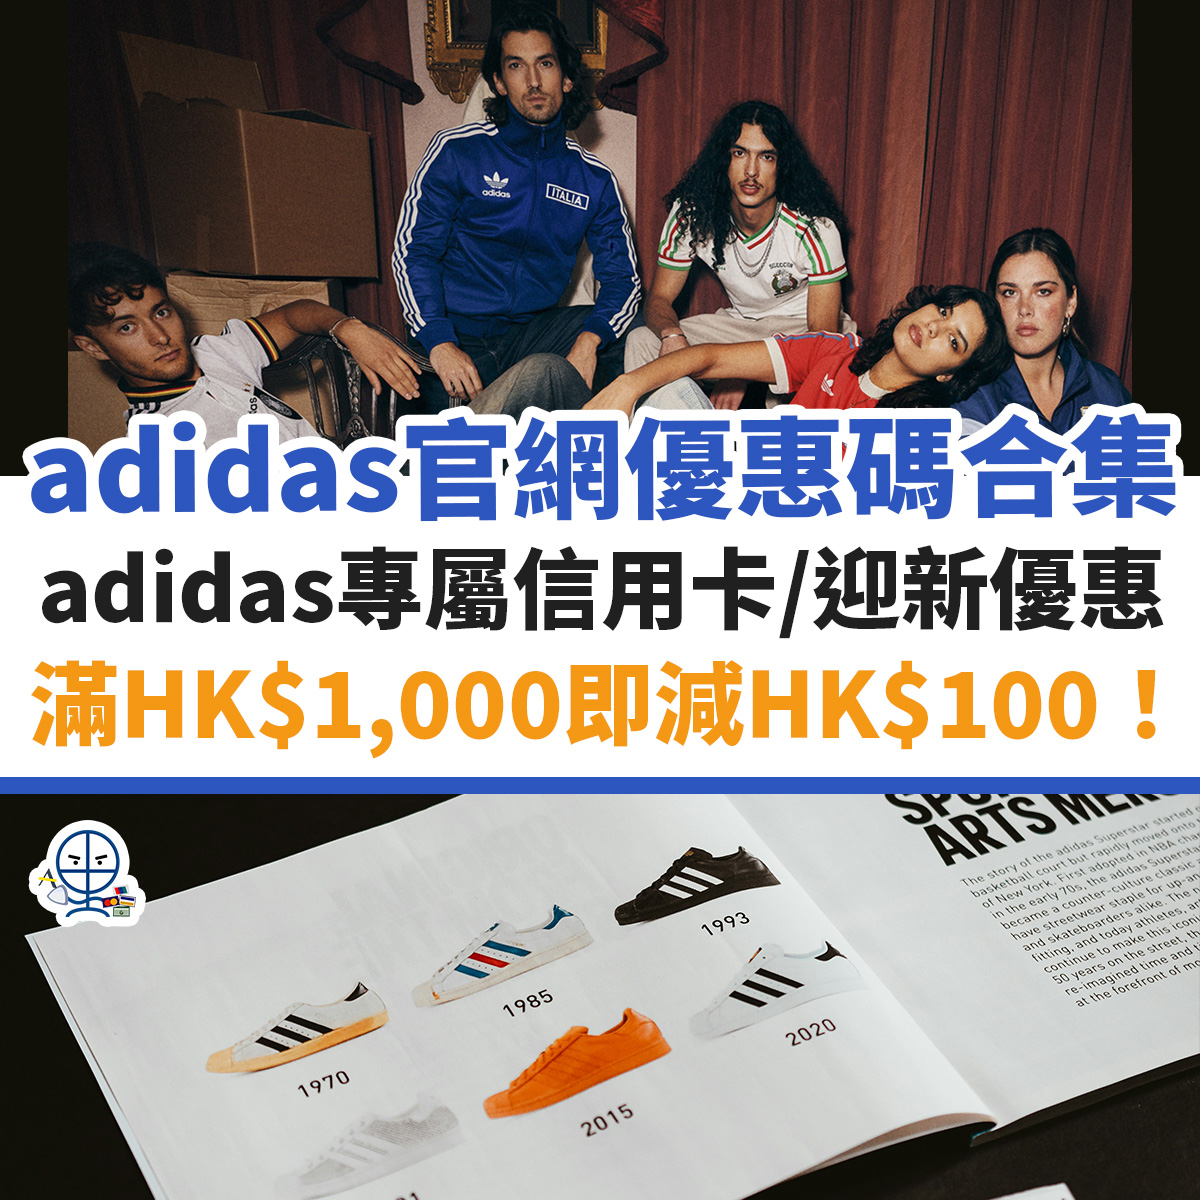 adidas-優惠-信用卡-迎新-波鞋-網購